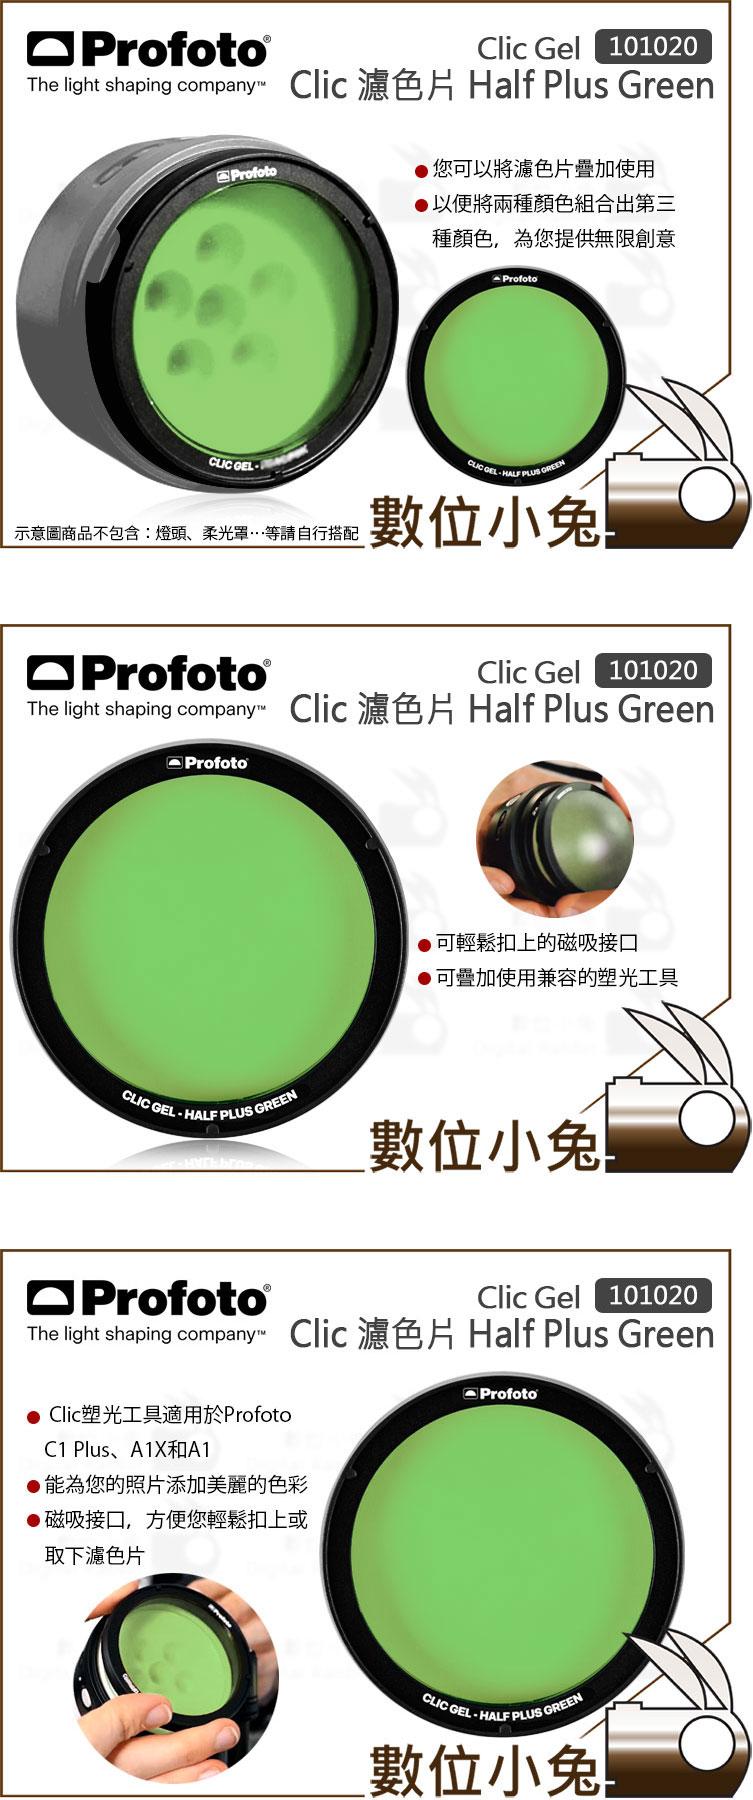 Profoto Clic Gel Half Plus Green 